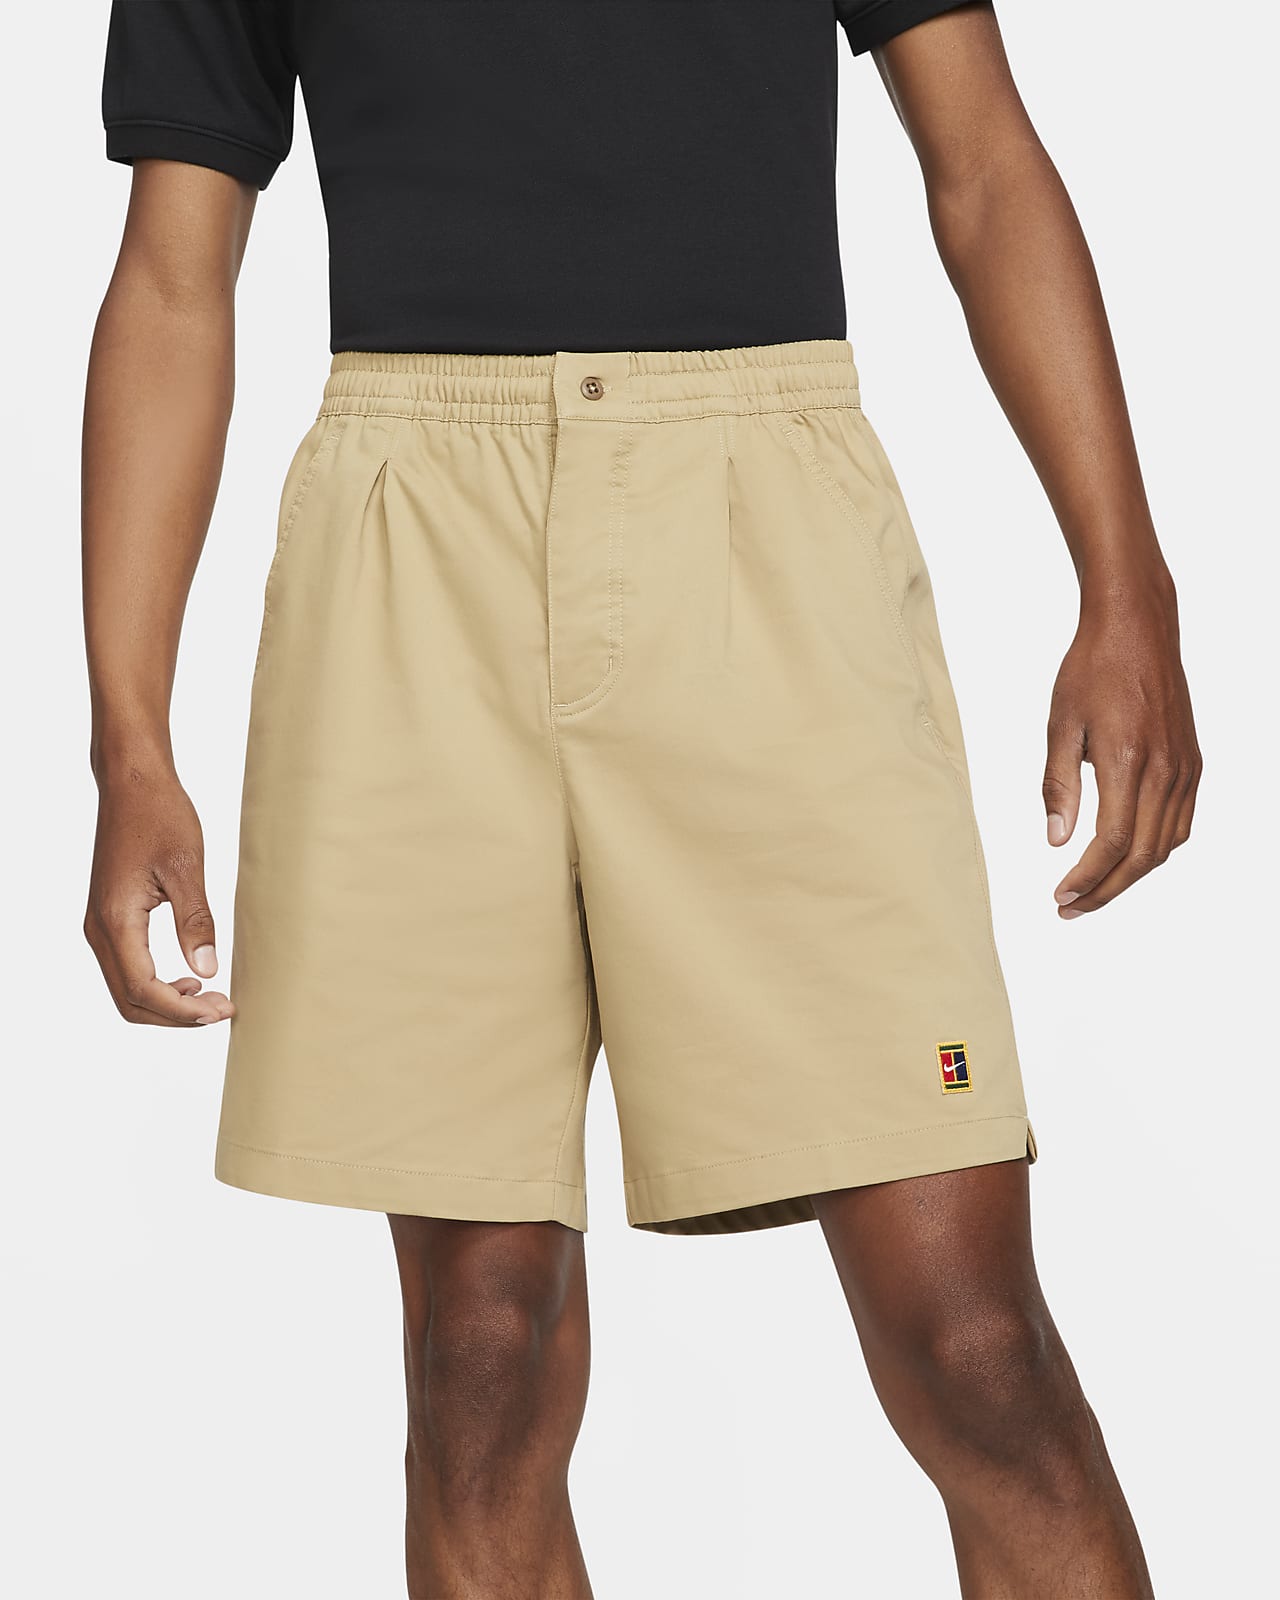 NikeCourt Men's Tennis Shorts